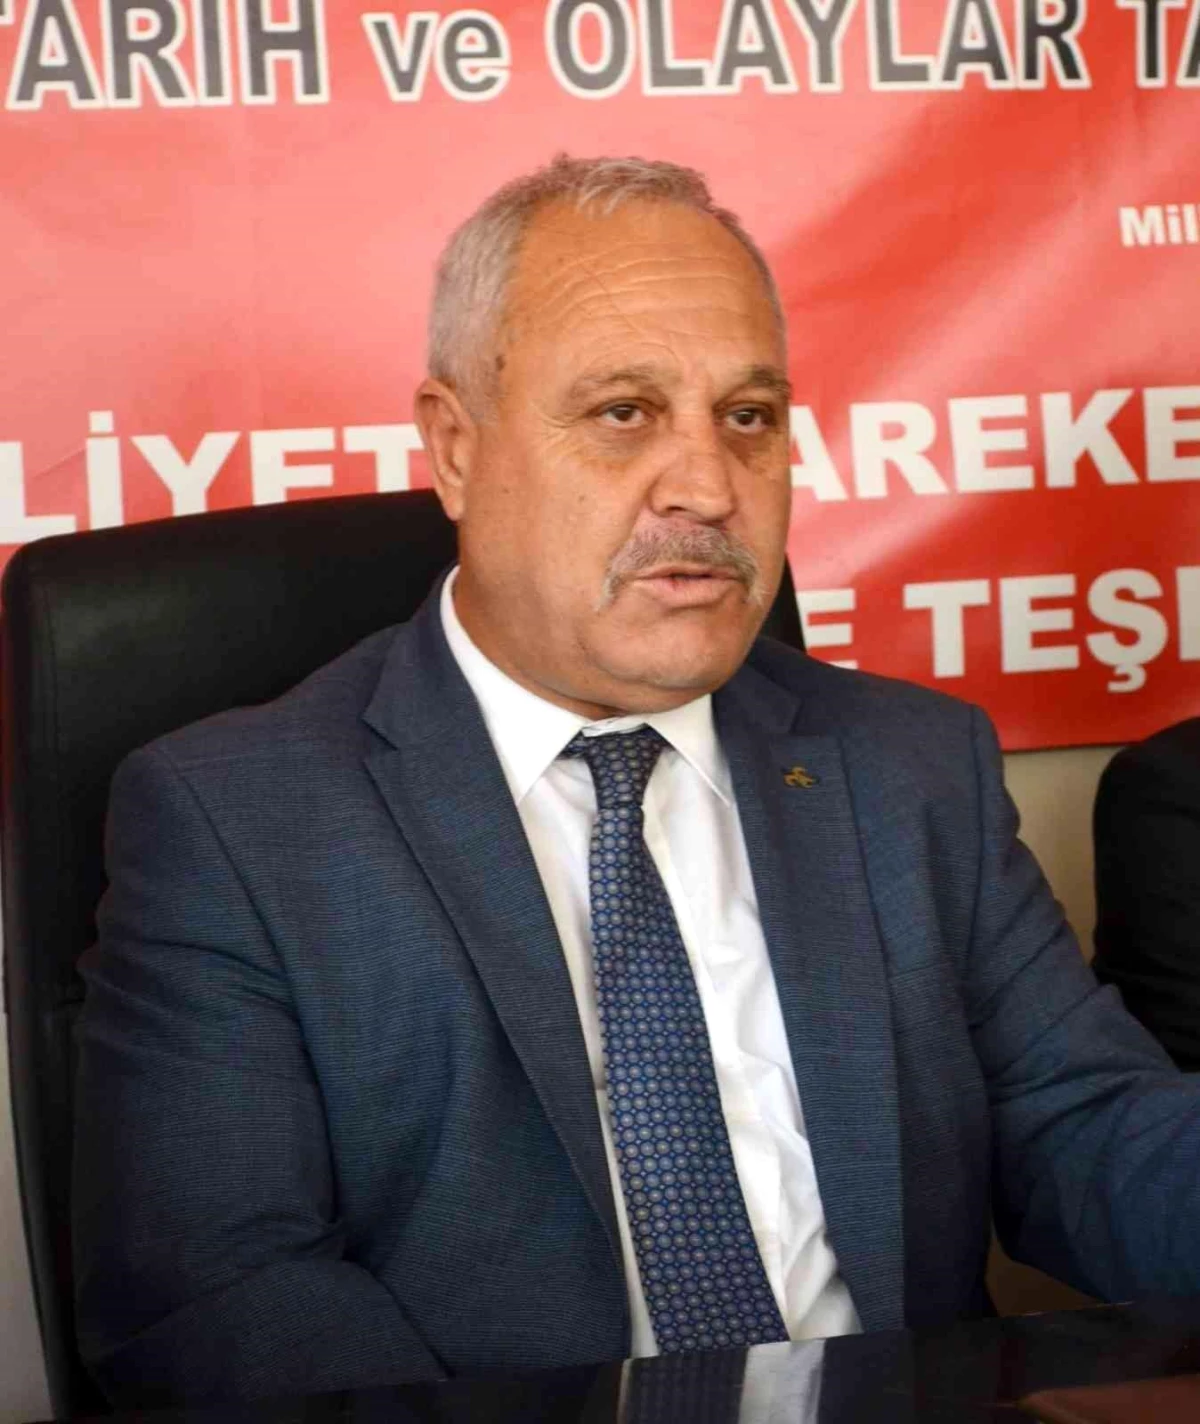 MHP Didim İlçe Başkanı görevinden istifa etti